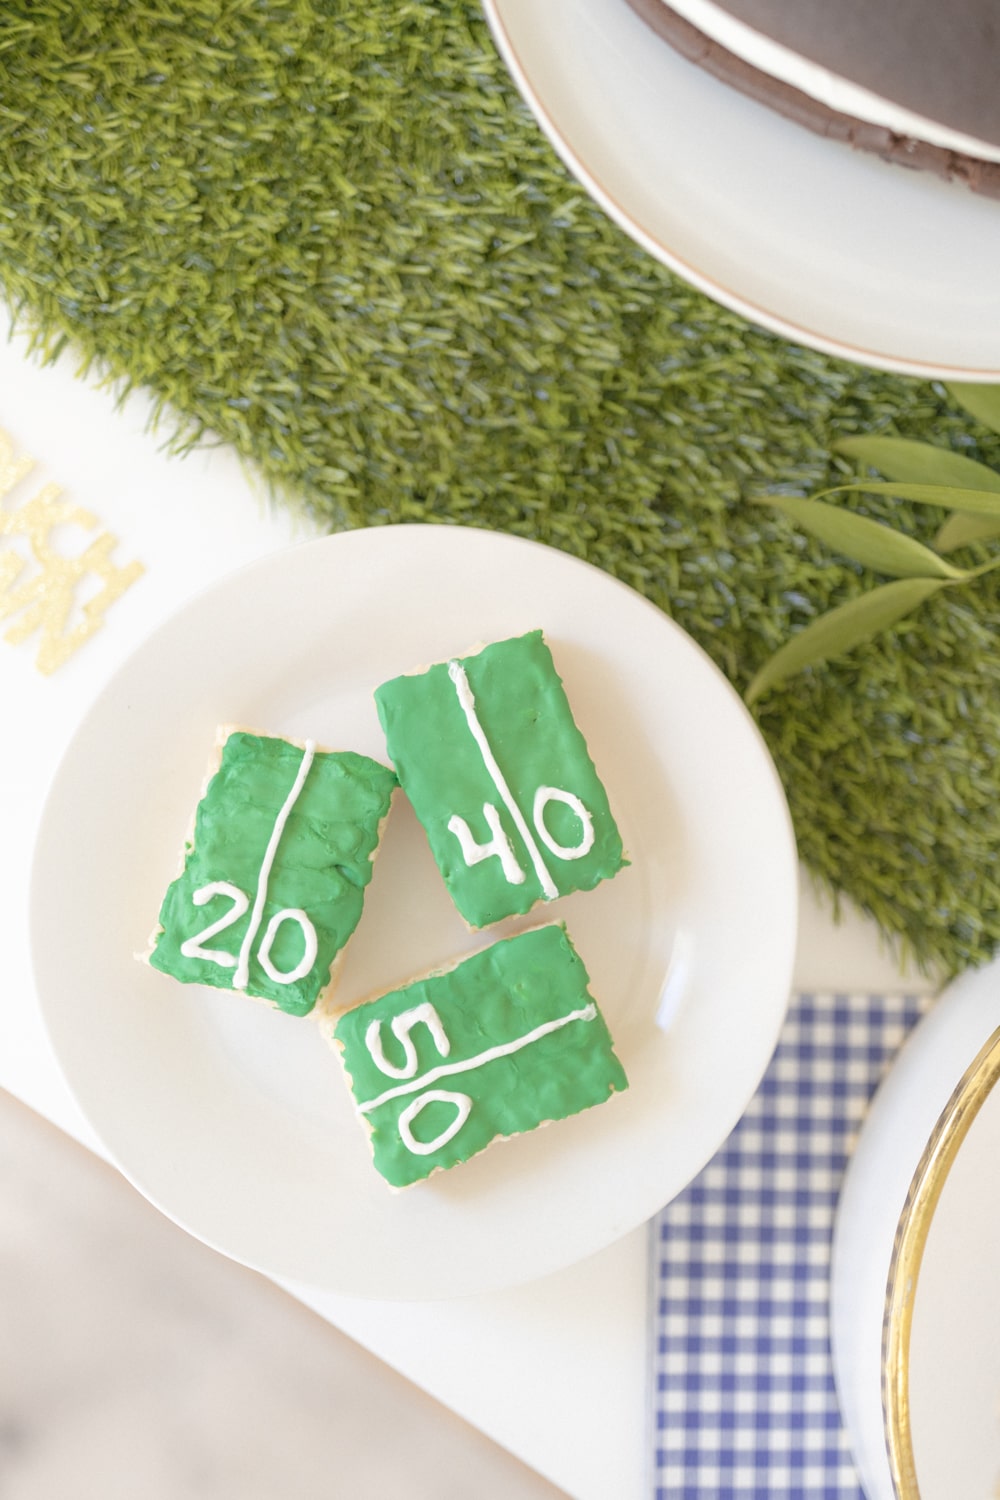 Football field rice krispie treats created by blogger Stephanie Ziajka on Diary of a Debutante